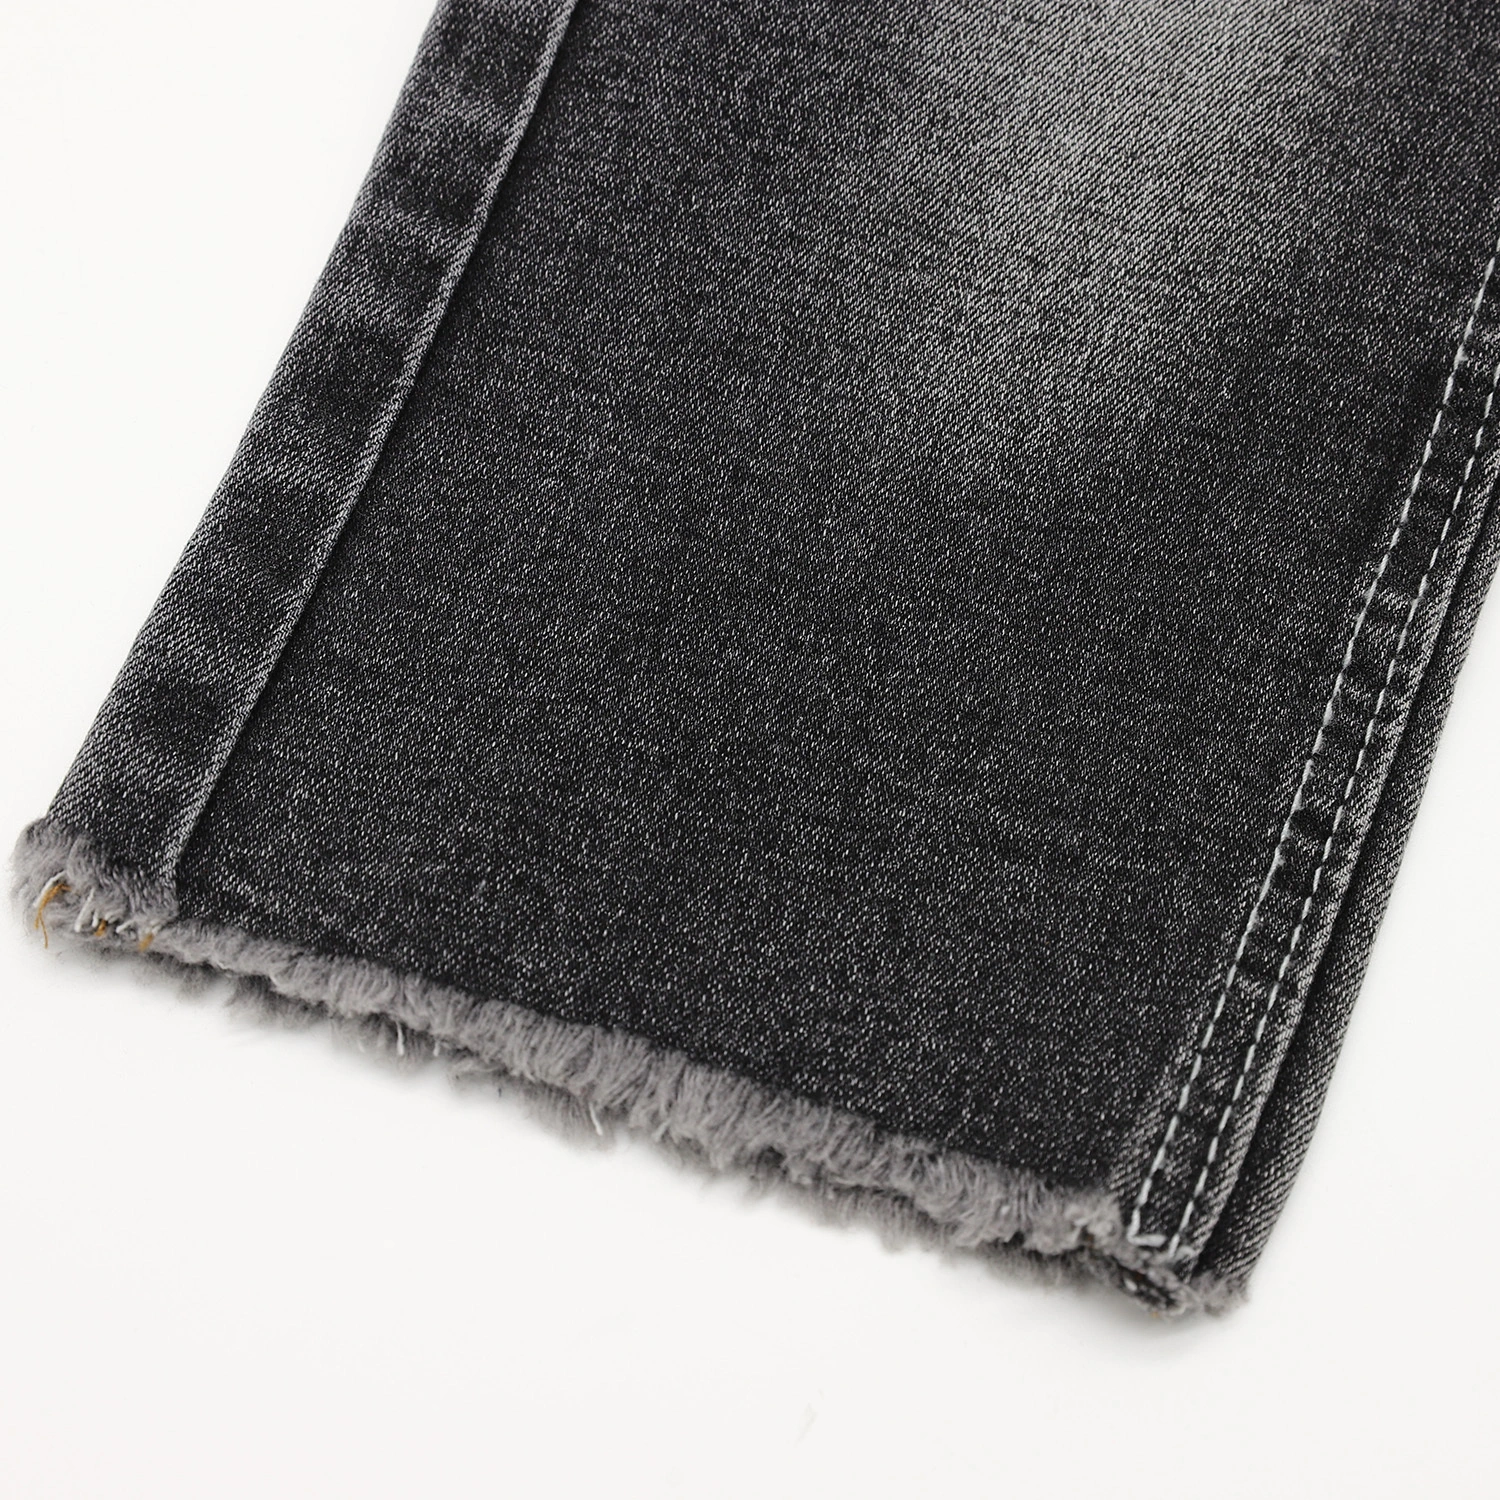 205H0-7H 10oz black denim fabric stretchable with spandex 4